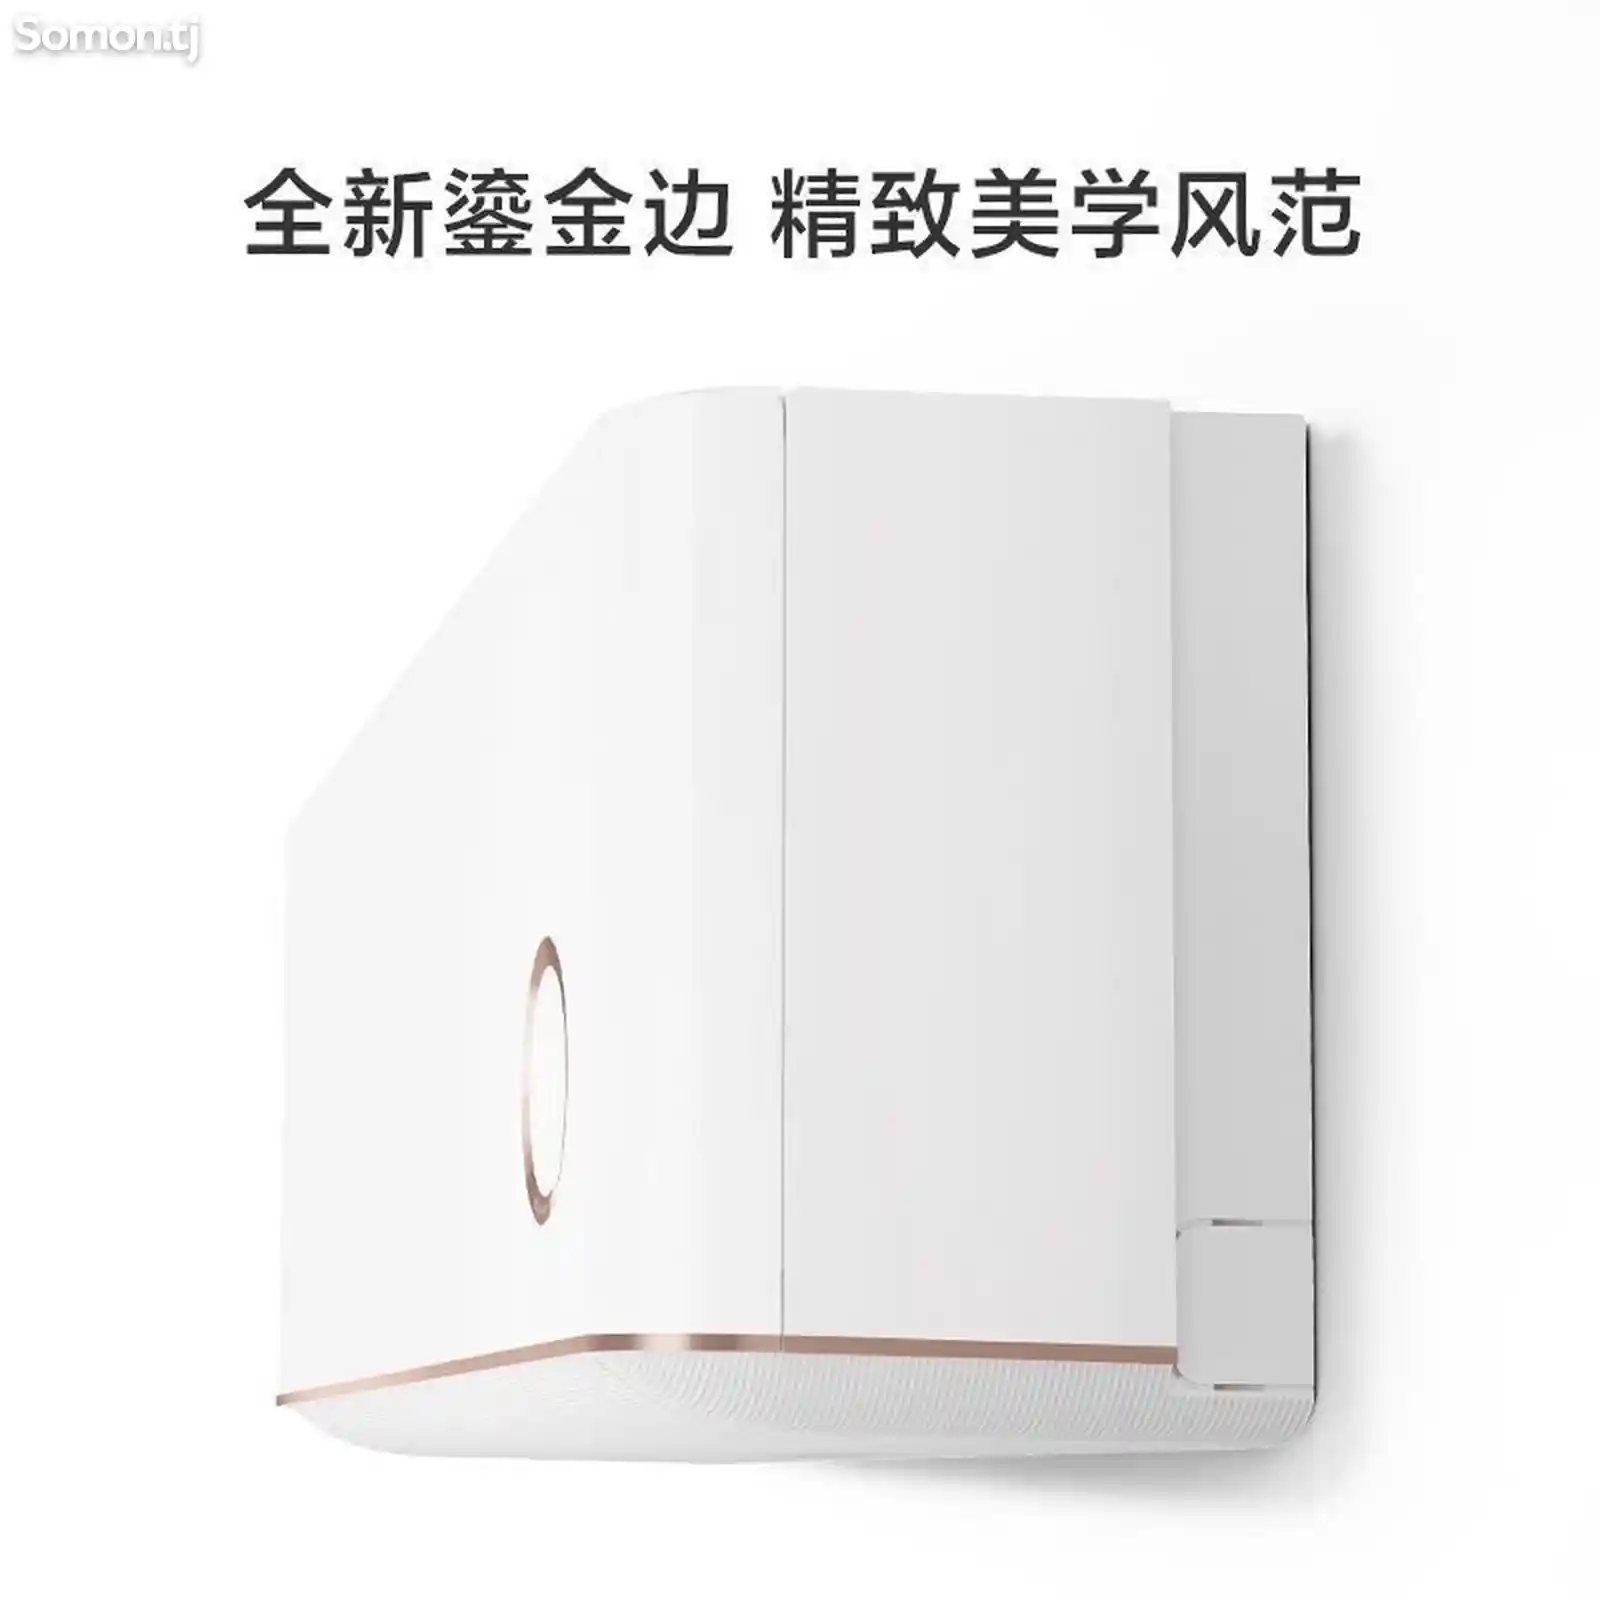 Кондиционер Xiaomi Mijia 18 куб-4